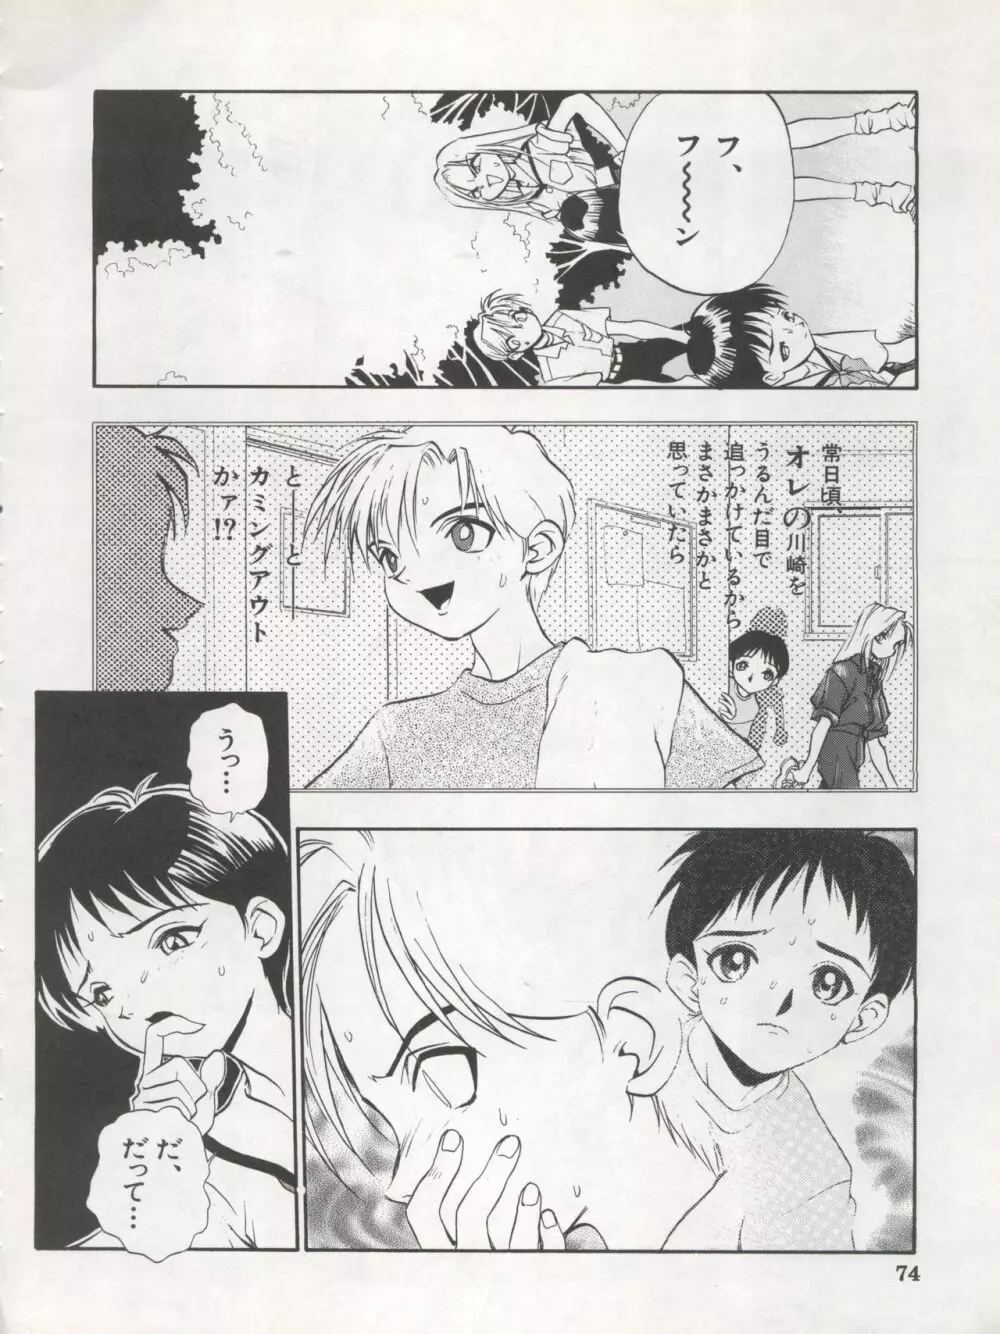 1998 SUMMER 電撃犬王 - page76